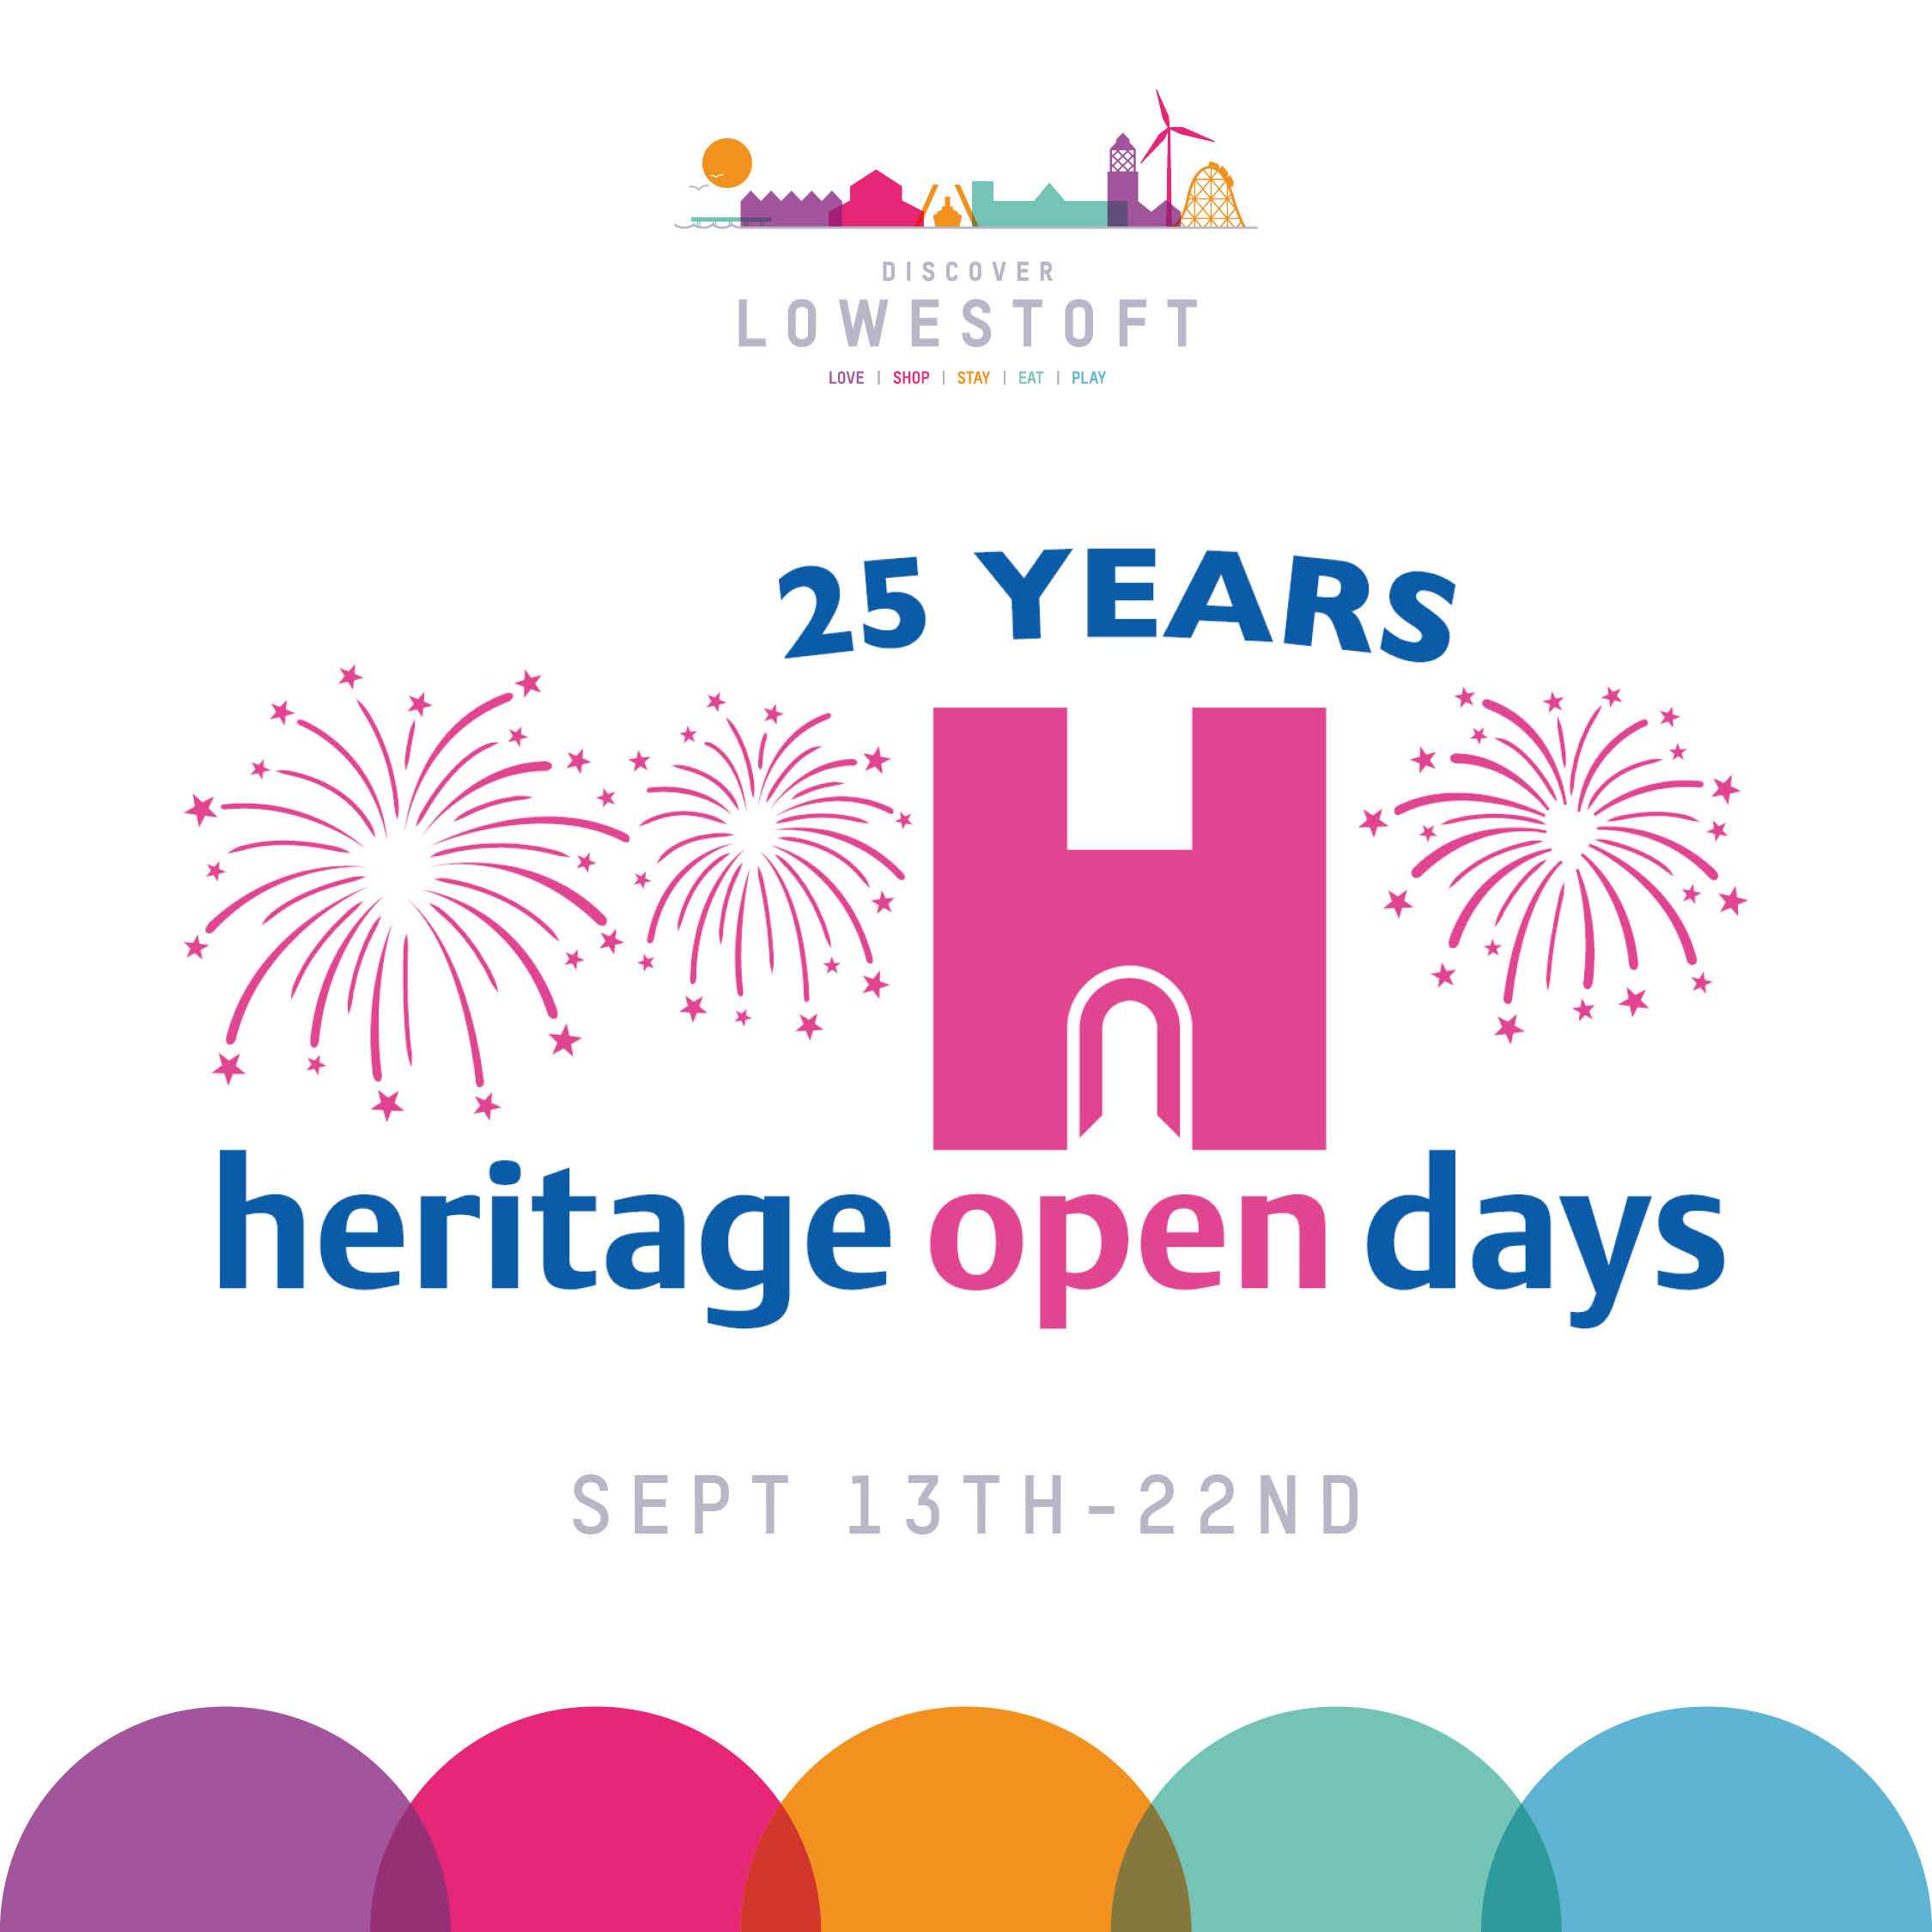 Lowestoft Heritage Open Days 2019 Image